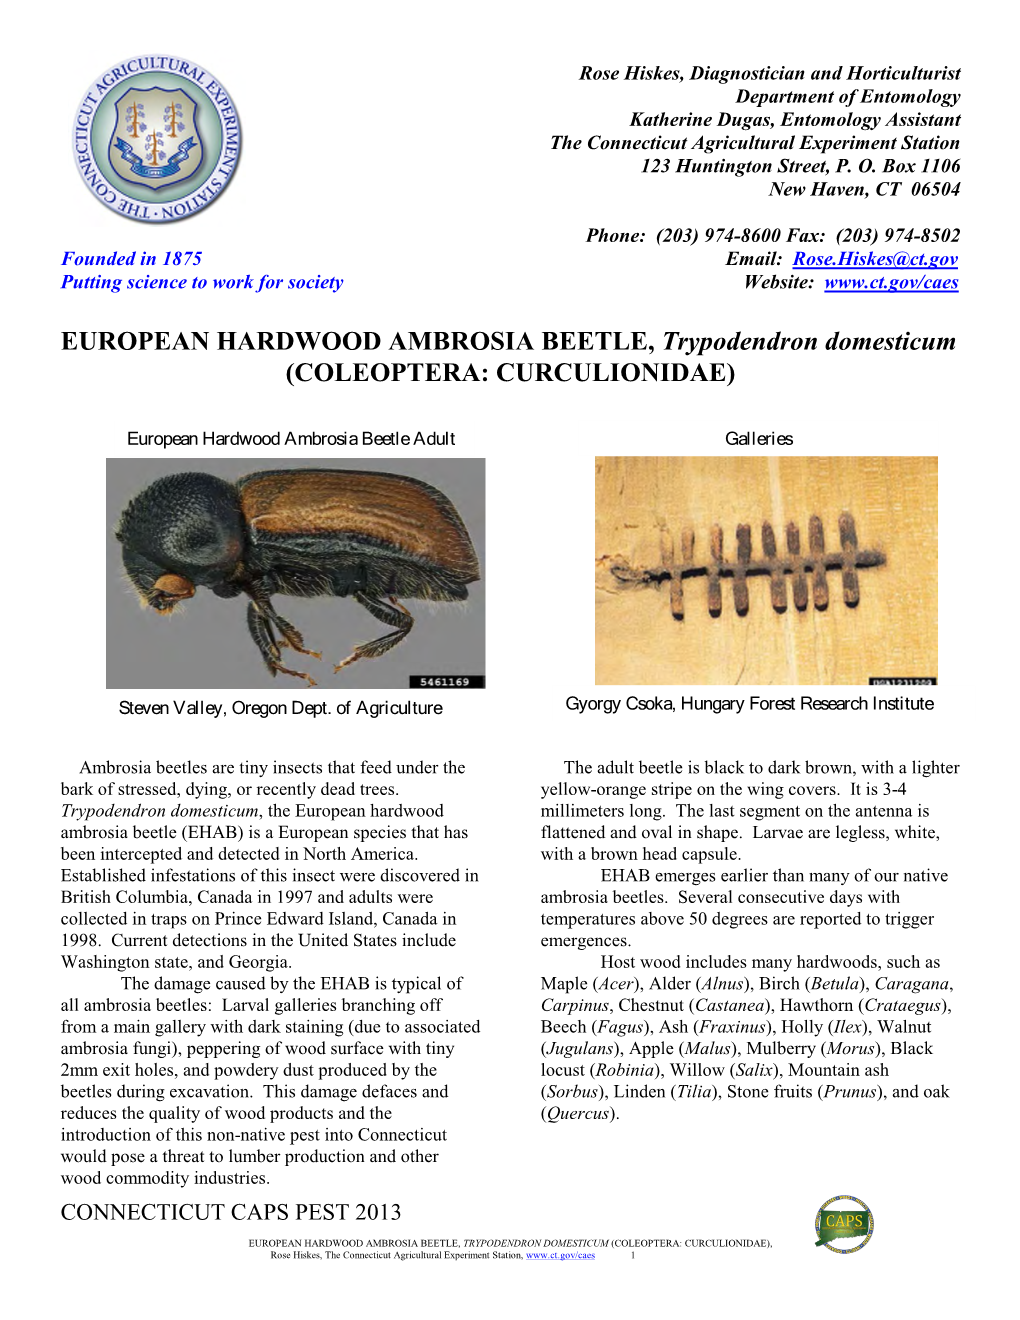 European Hardwood Ambrosia Beetle Factsheet